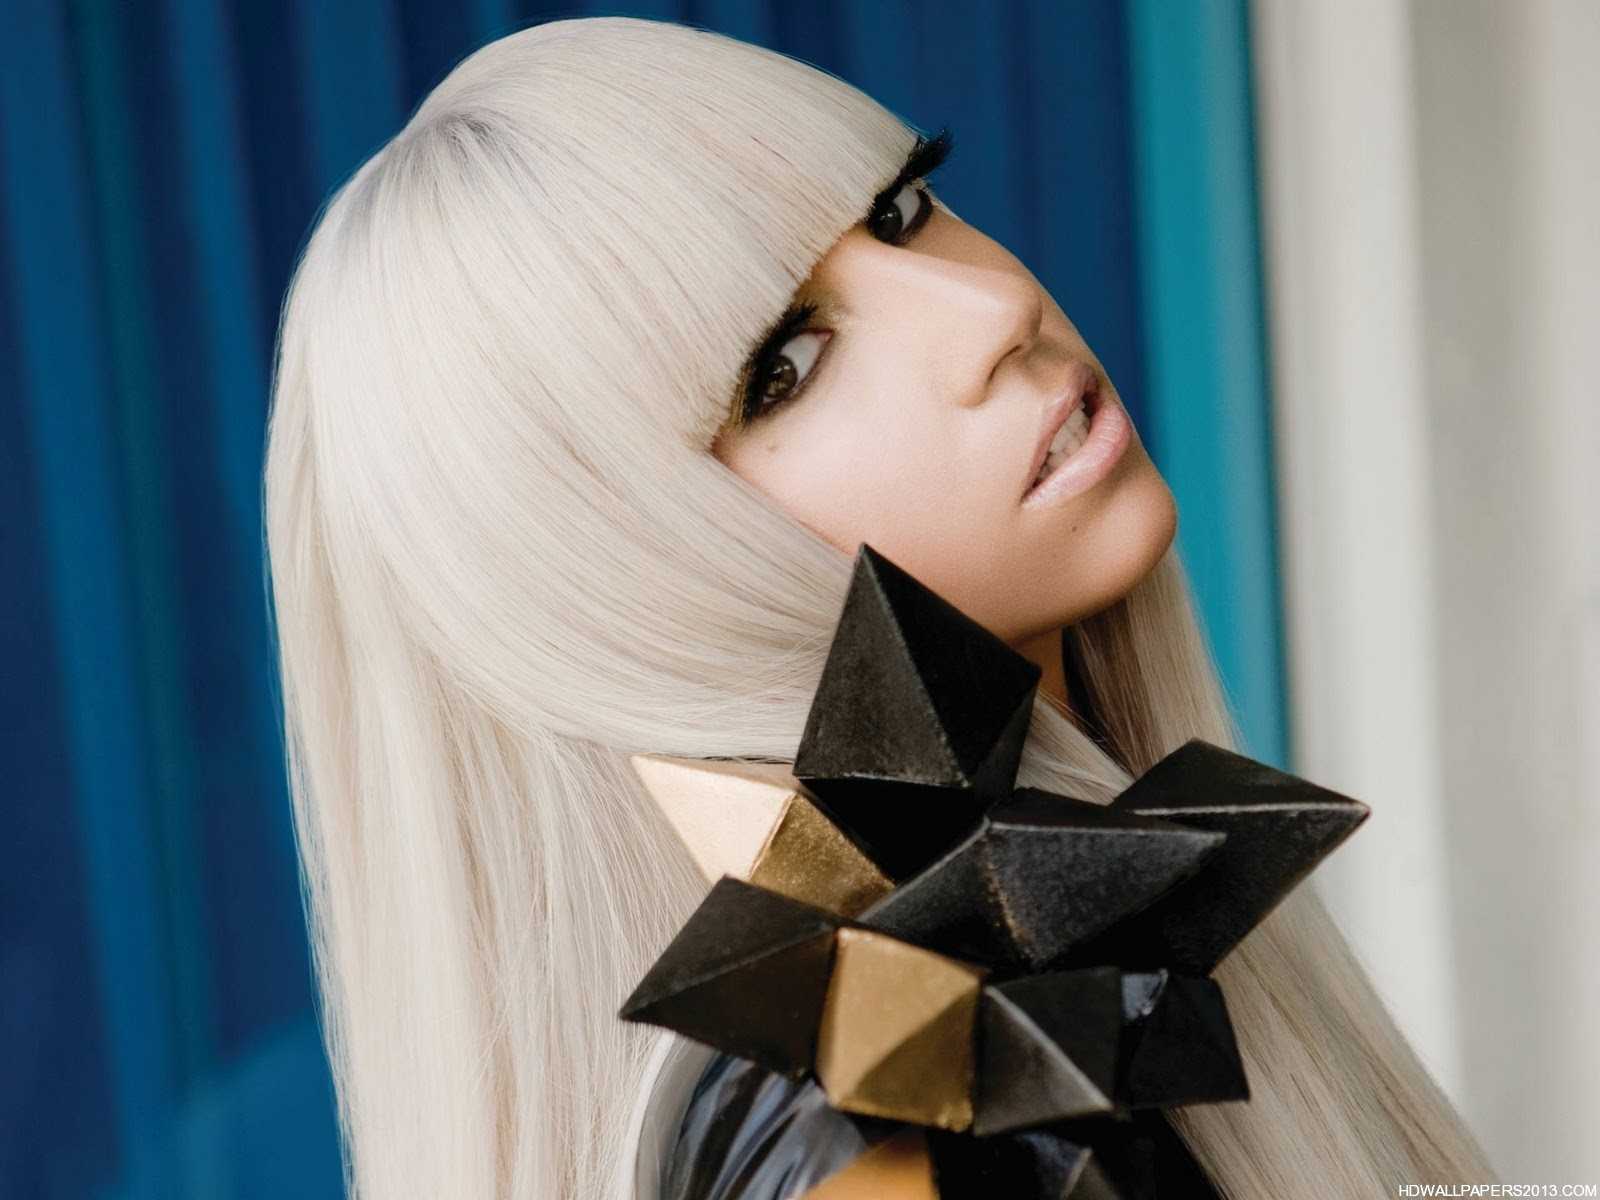 Itunes Festival 2013: Lady GaGa show presenta sette inediti estratti da ARTPOP